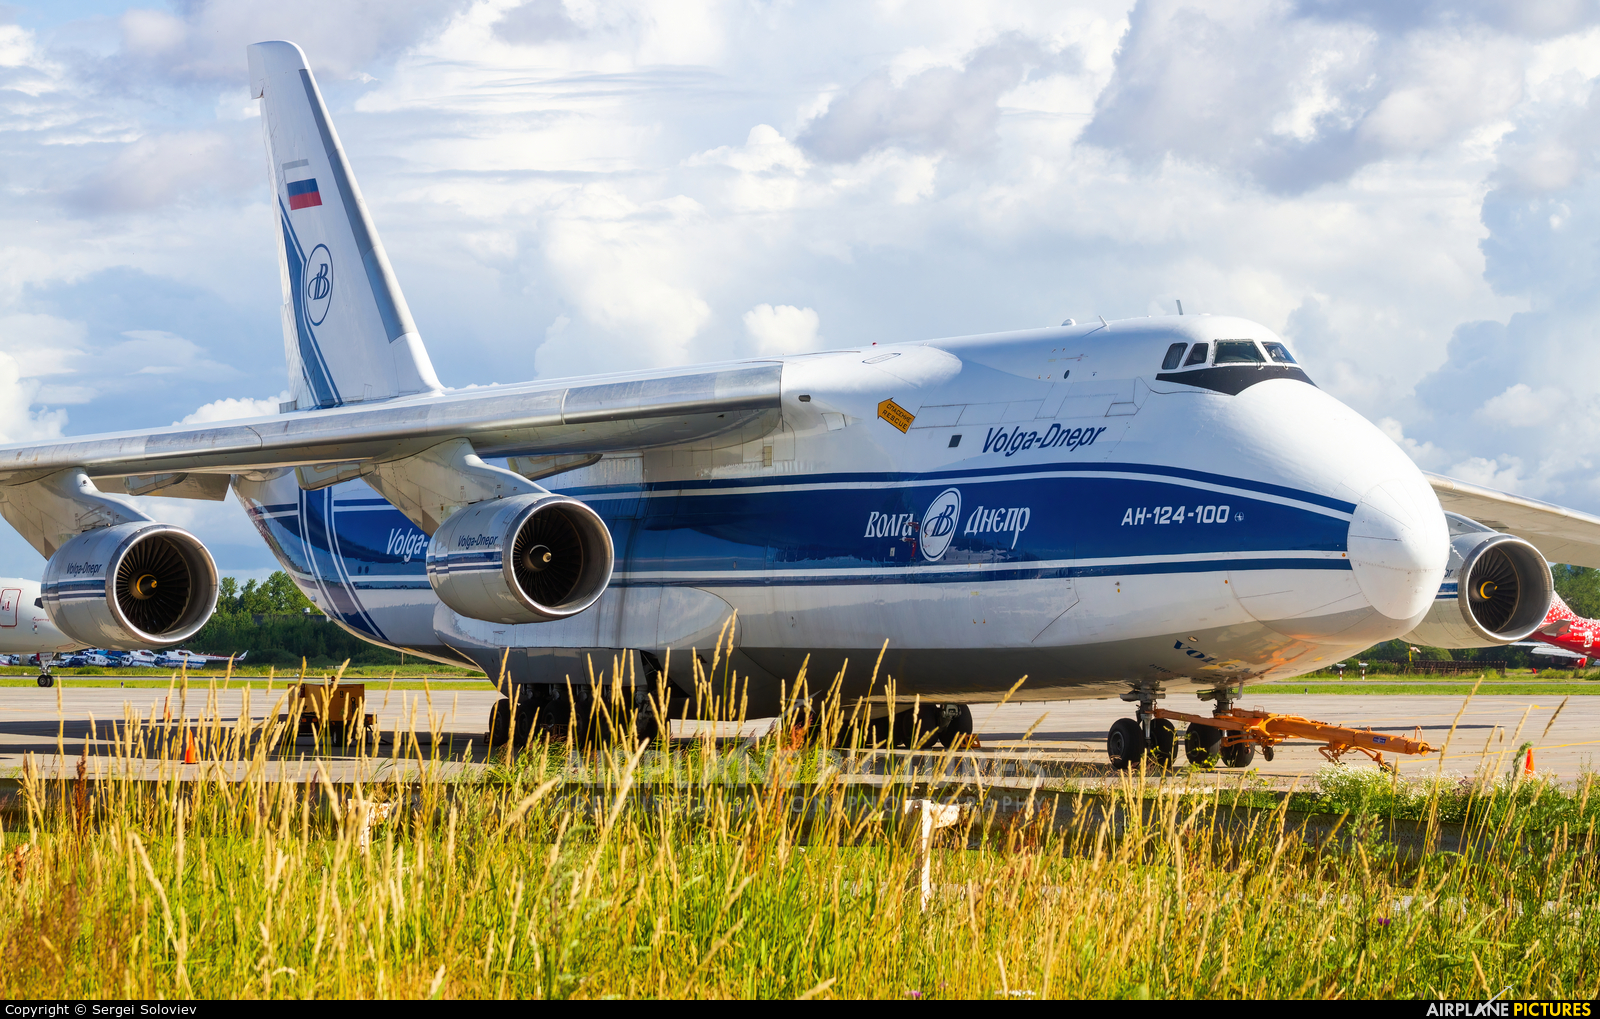 Volga Dnepr Airlines RA-82078 aircraft at St. Petersburg - Pulkovo